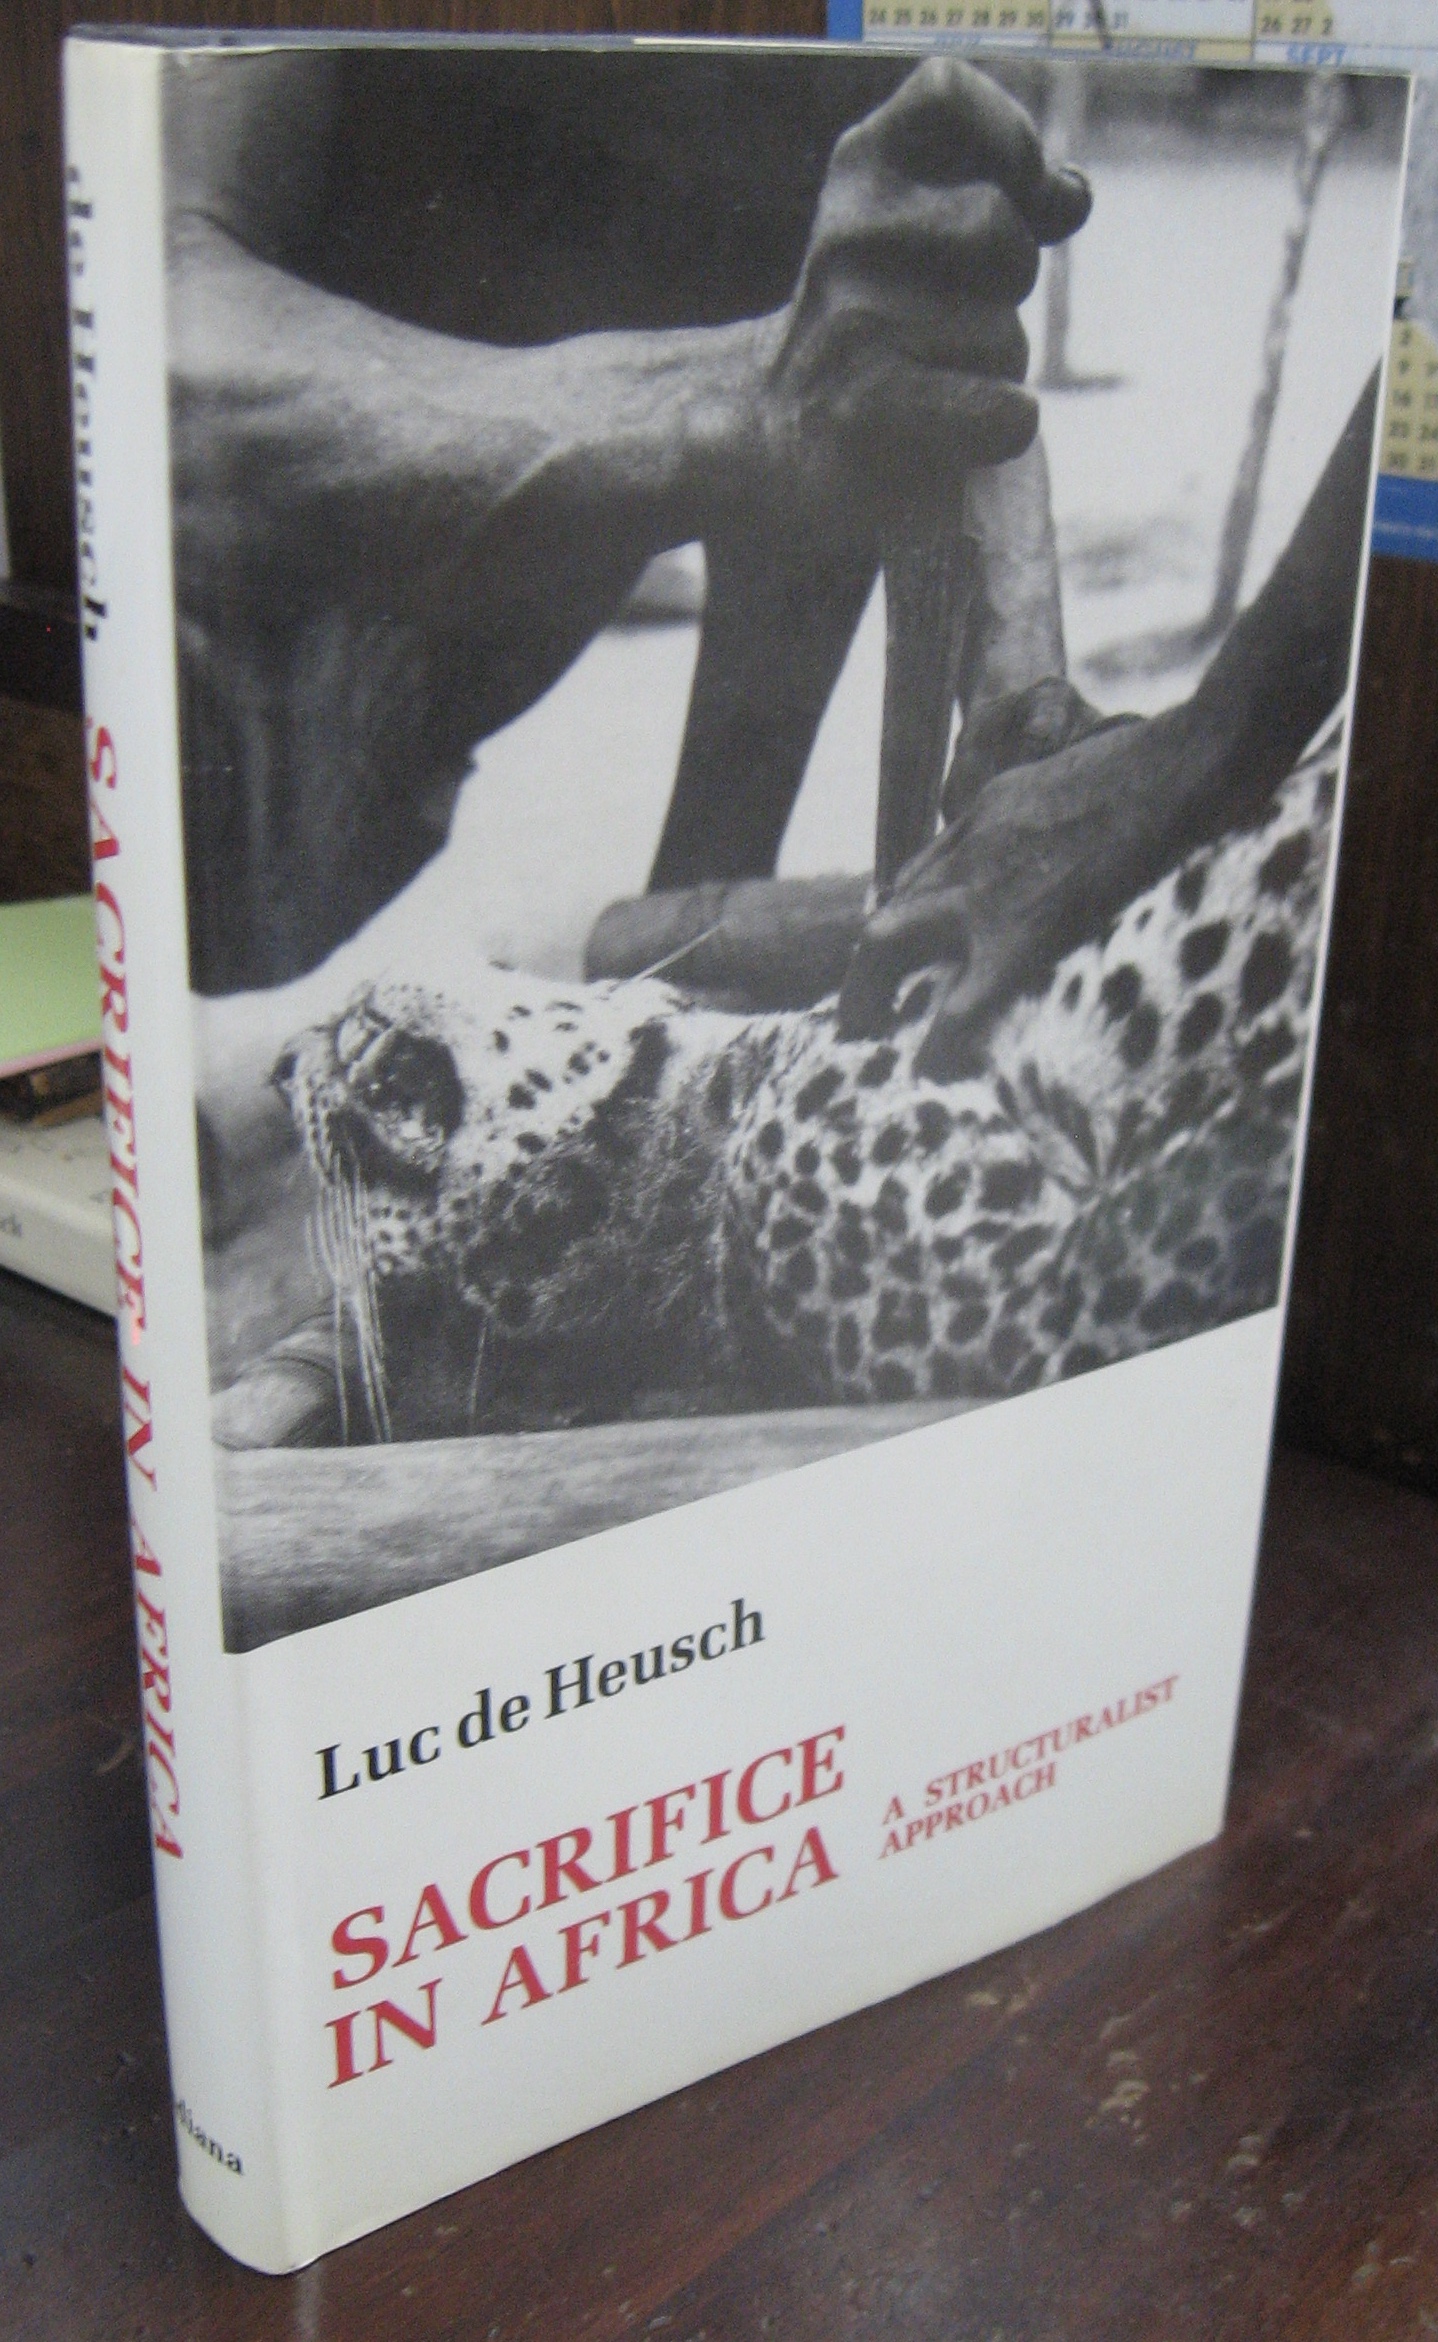 Sacrifice in Africa: A Structuralist Approach - Heusch, Luc de; O'Brien, Linda and Alice Morton (trans.)